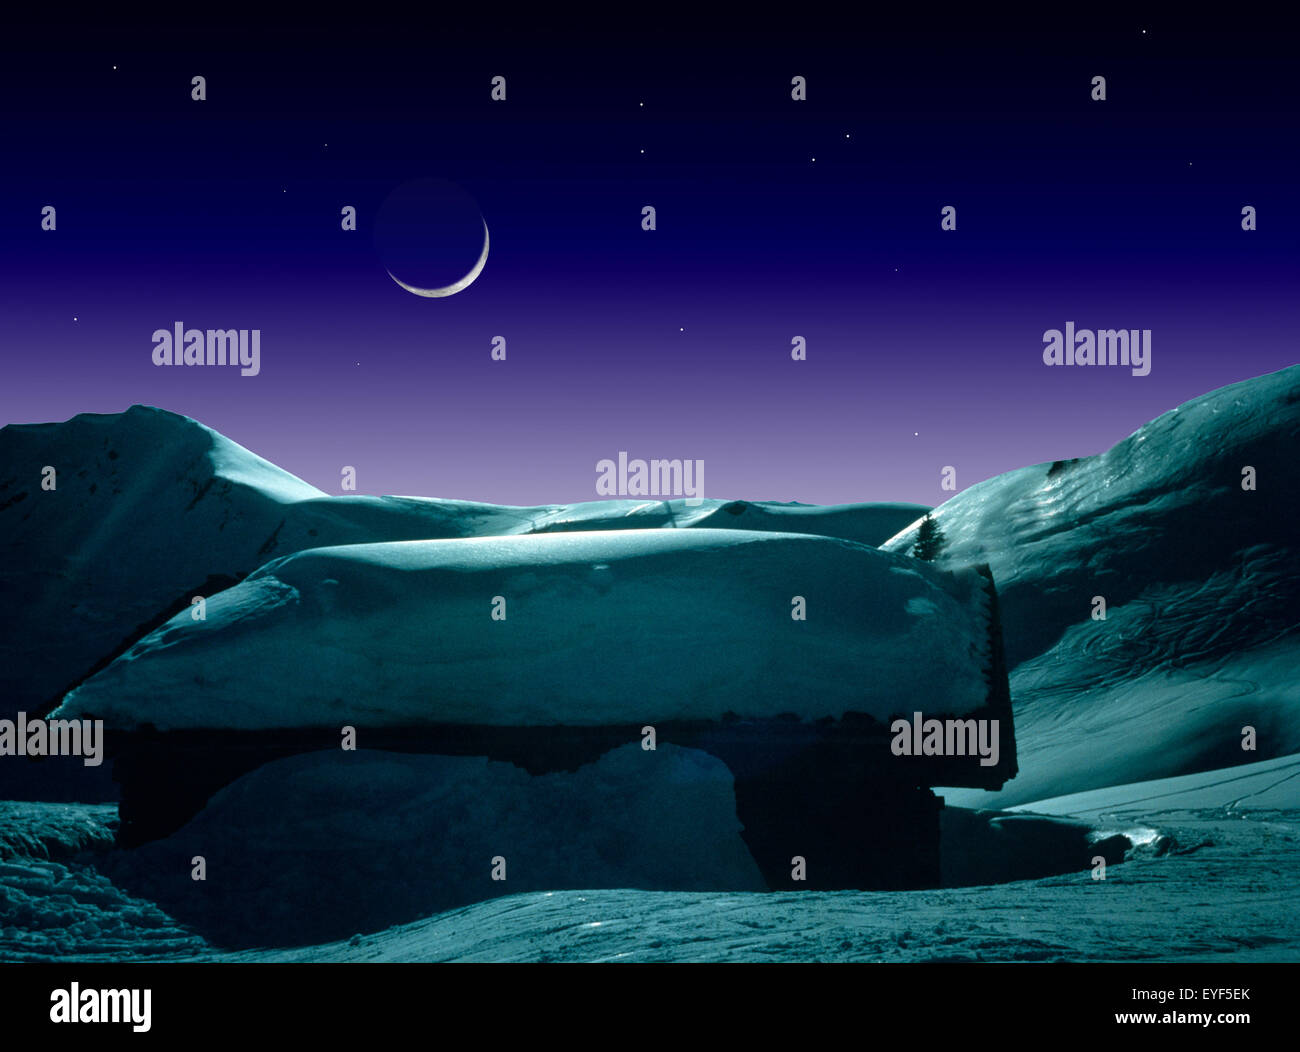 Mond Mond Zunehmender Zunehmender;;;; gespenstisch dunkel Vollmond Berghuette unheimlich;;; Foto de stock